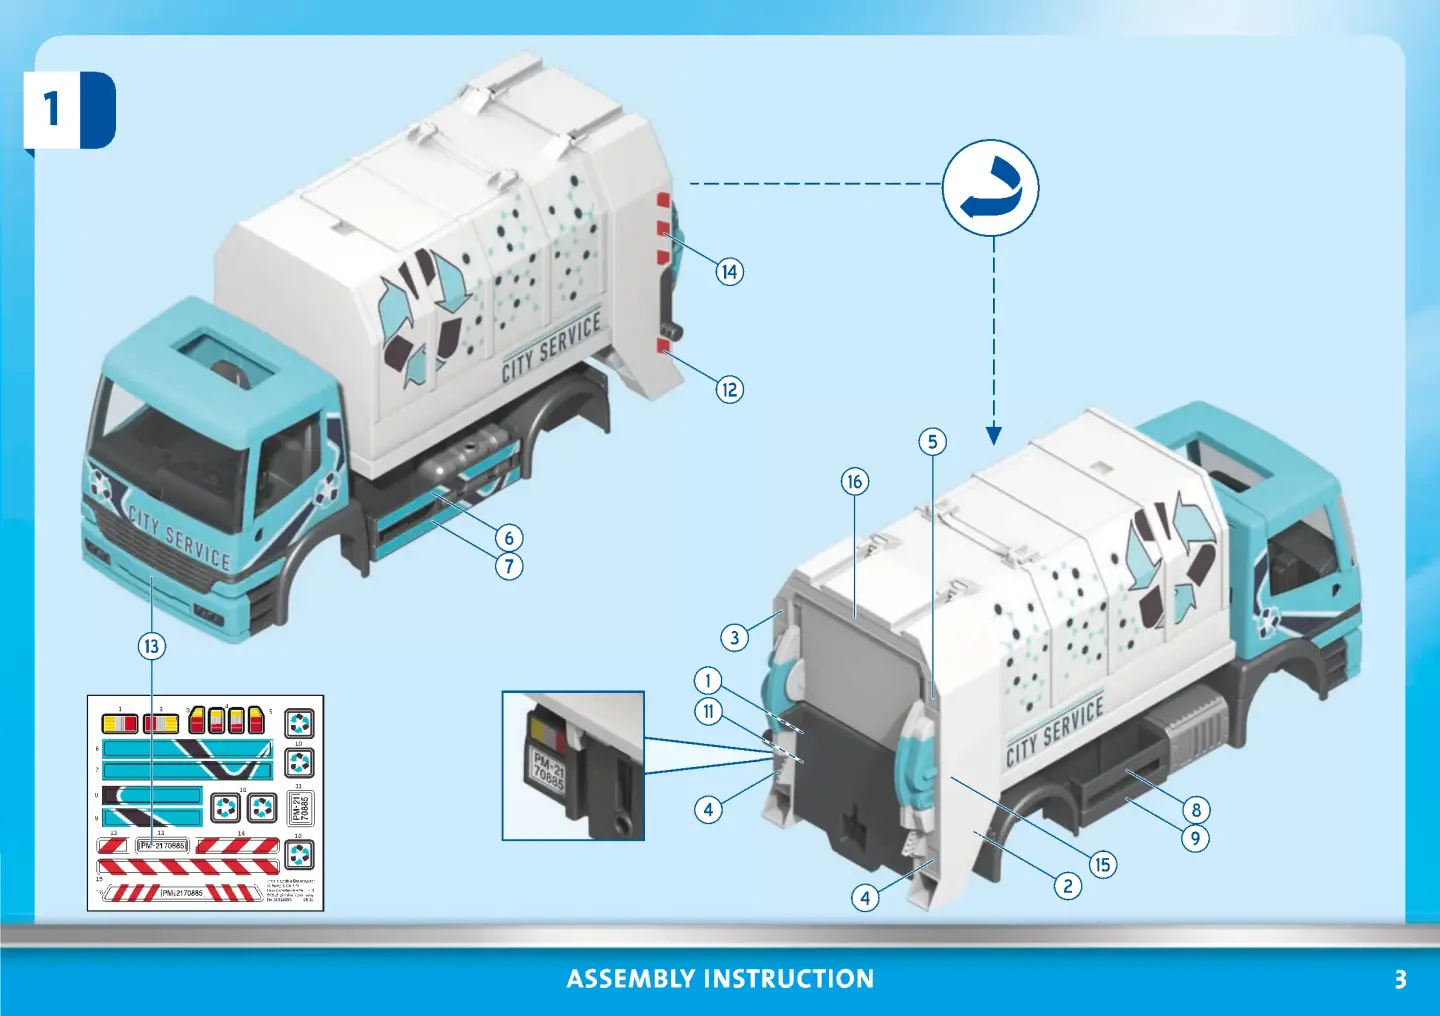 PLAYMOBIL City Recycling Truck Müllabfuhr Camion poubelle Camión de Basura  🗑️♻️ 70885 build & play 